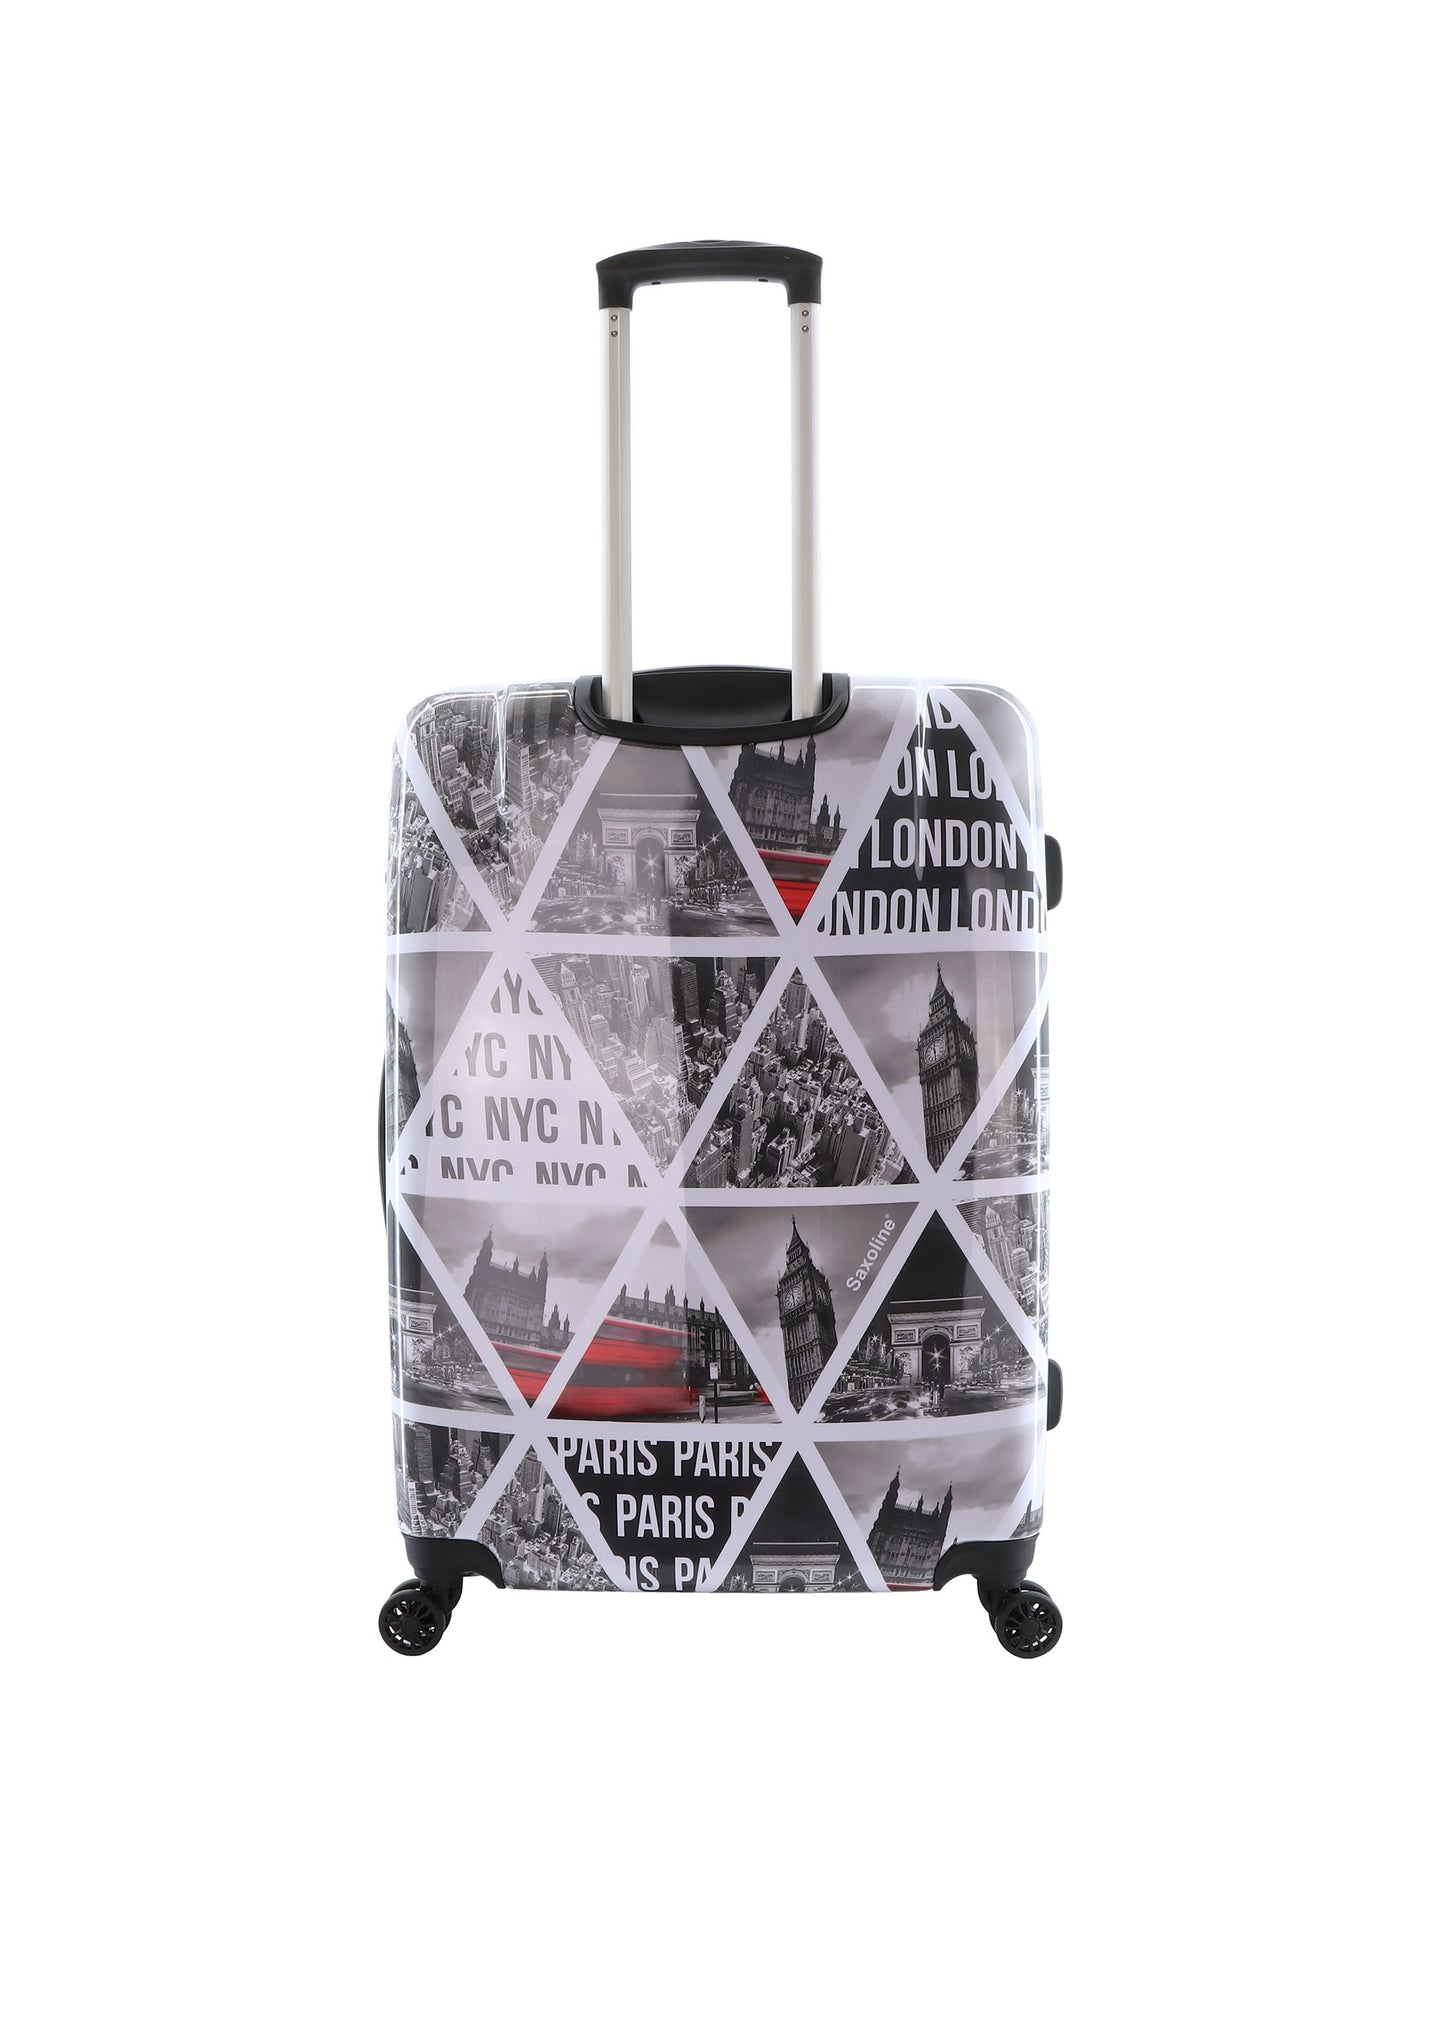 Saxoline Hard Case / Trolley / Travel Case - 74 cm (Large) - Cities Print